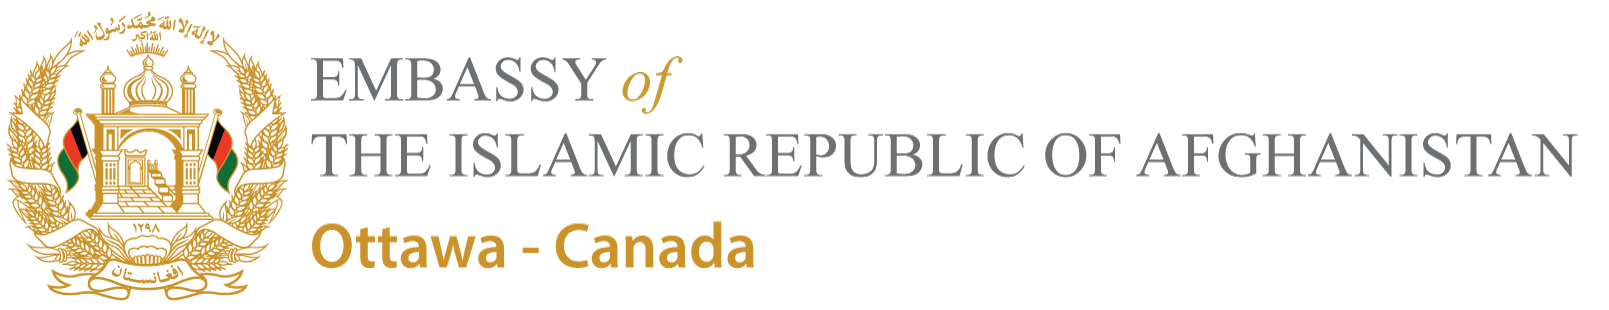 Embassy of the Islamic Republic of Afghanistan | Ottawa - Canada